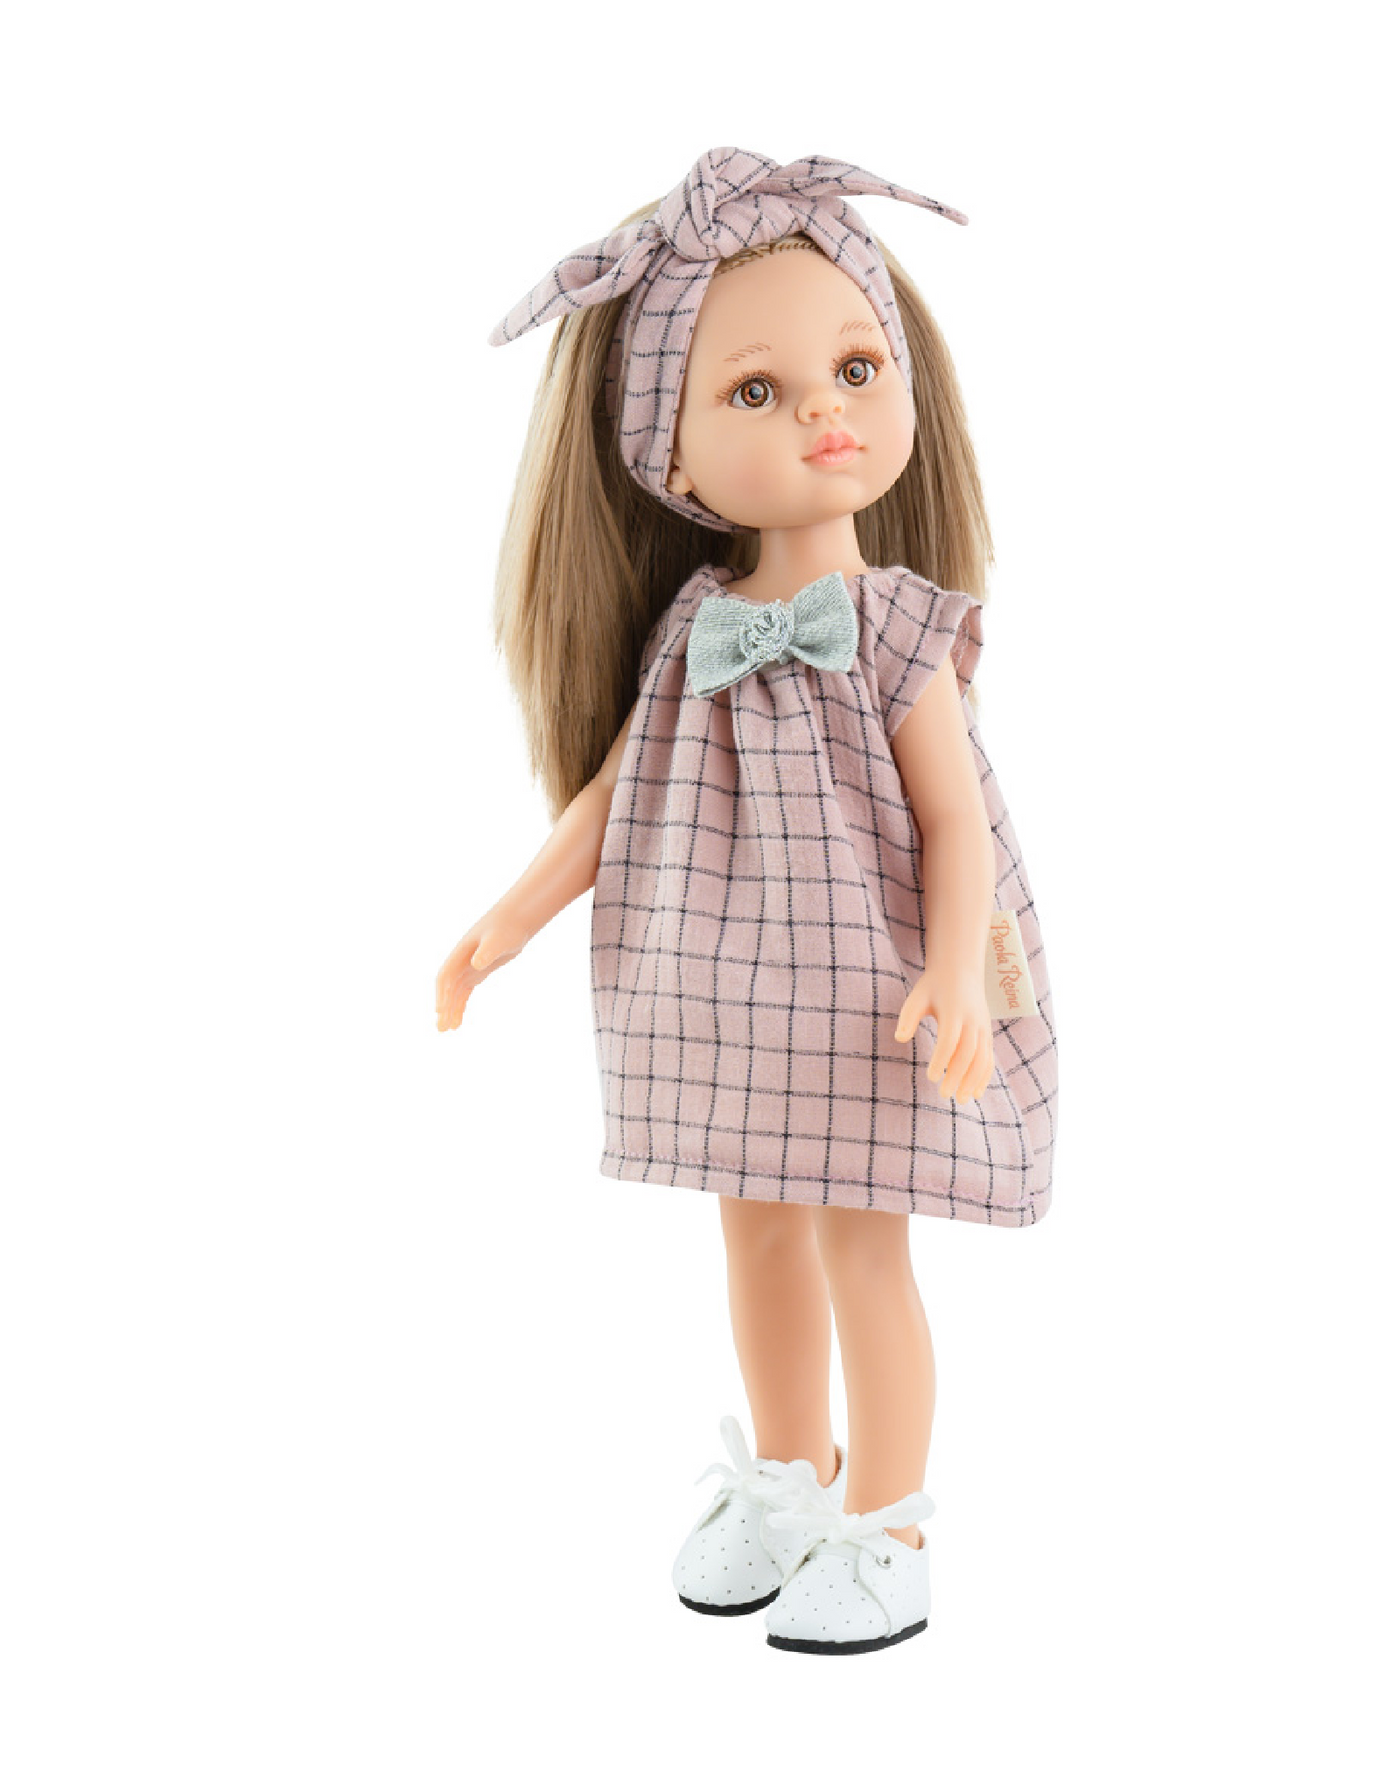 Las Amigas Doll - Annie pink dress and checkered strip - Paola Reina